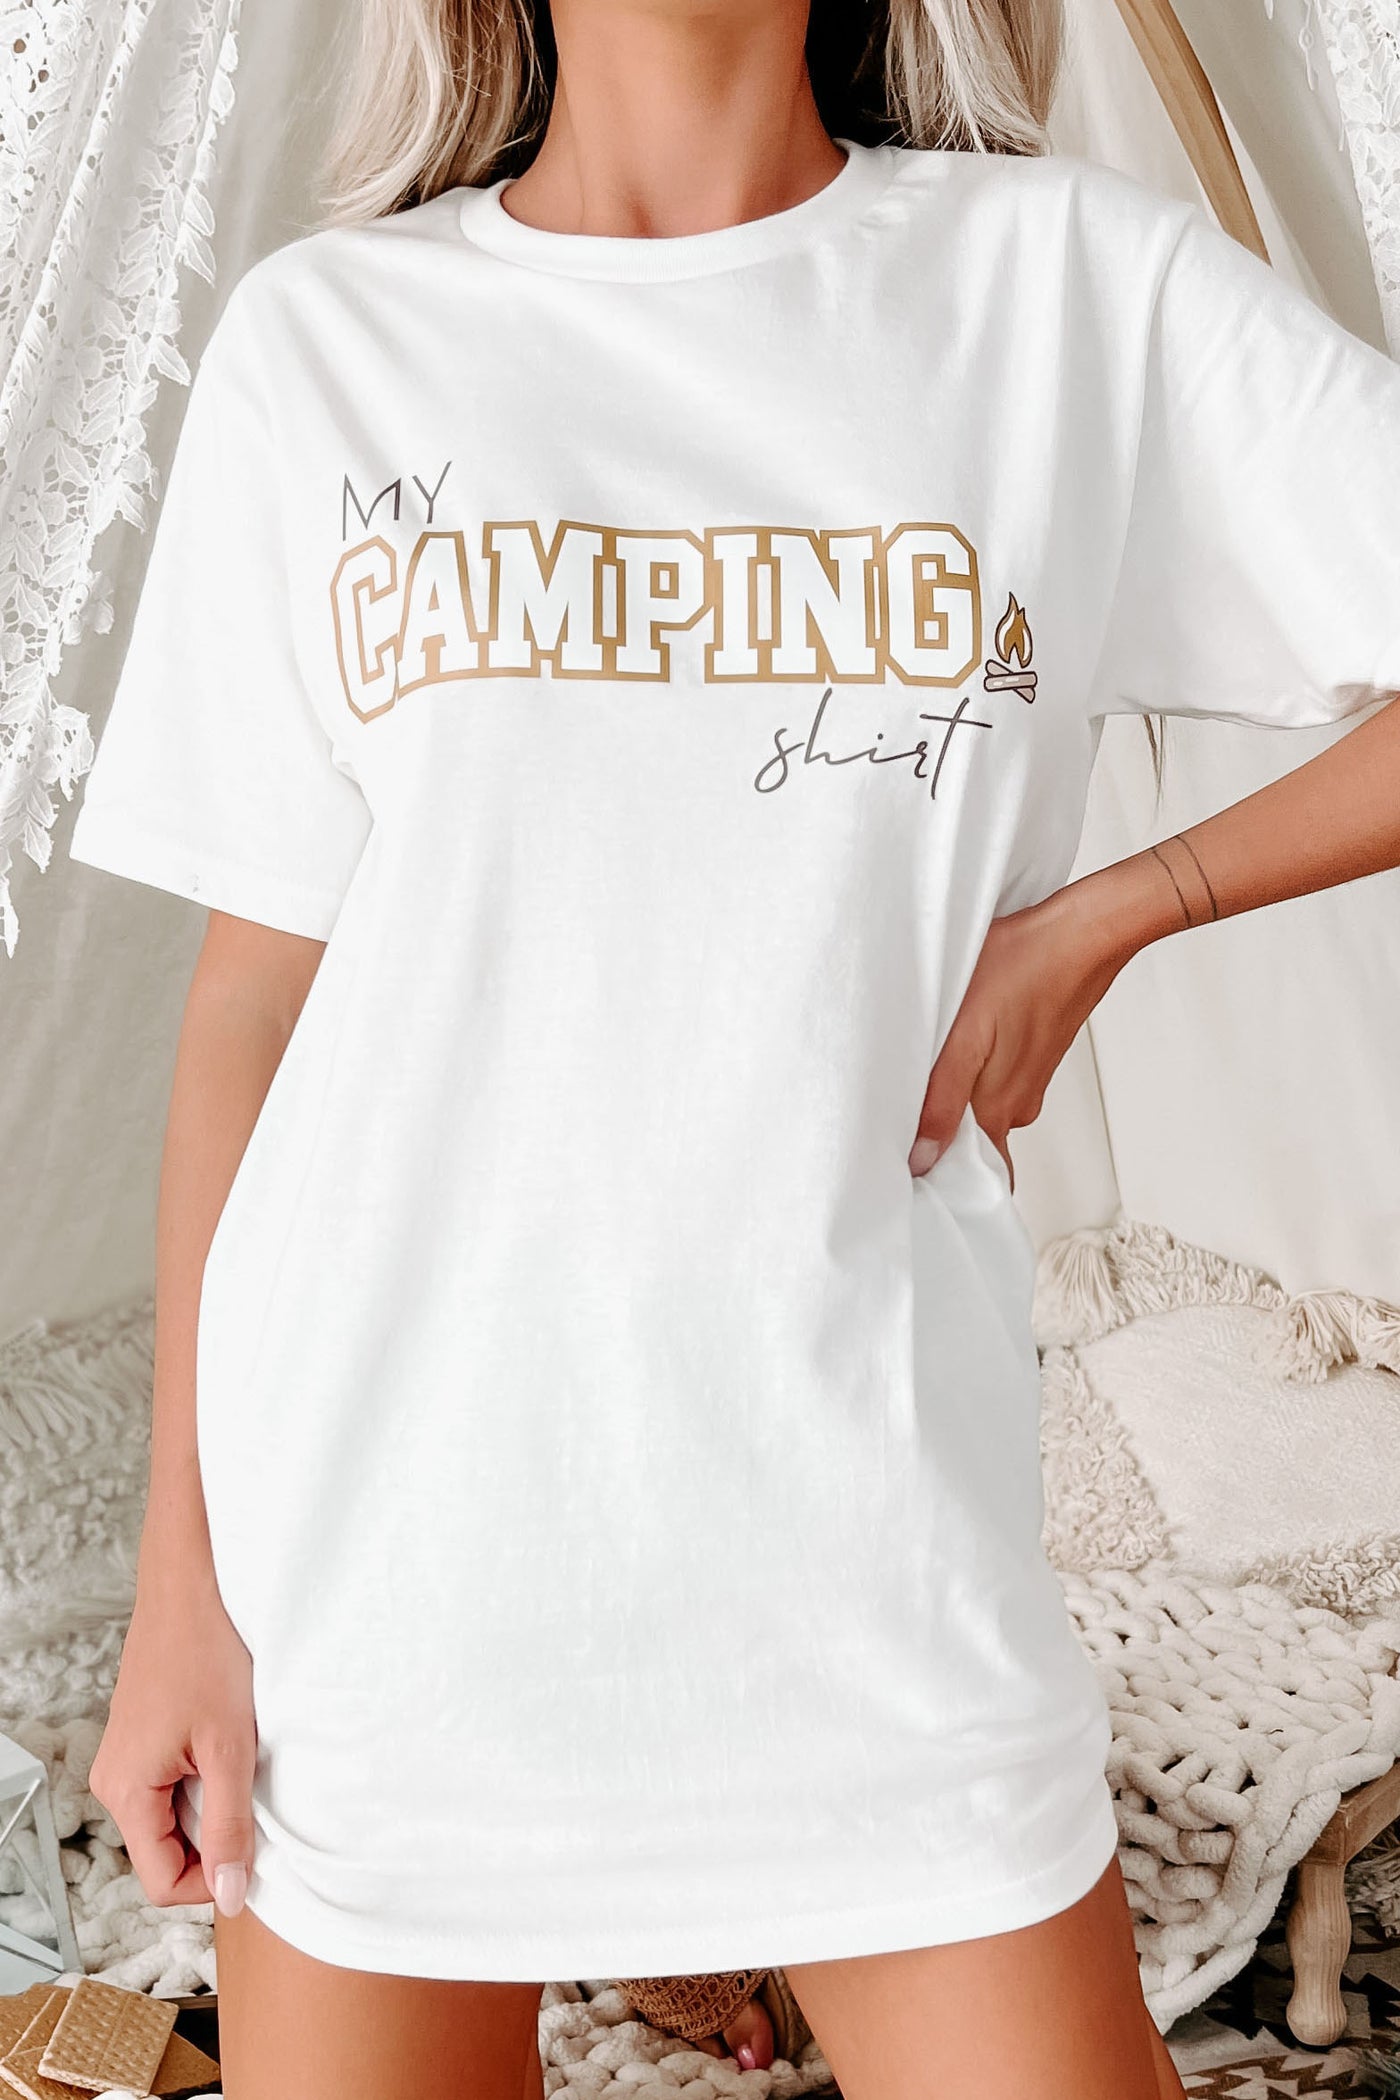 "My Camping Shirt" Metallic Graphic - Multiple Shirt Options (White) - Print On Demand - NanaMacs